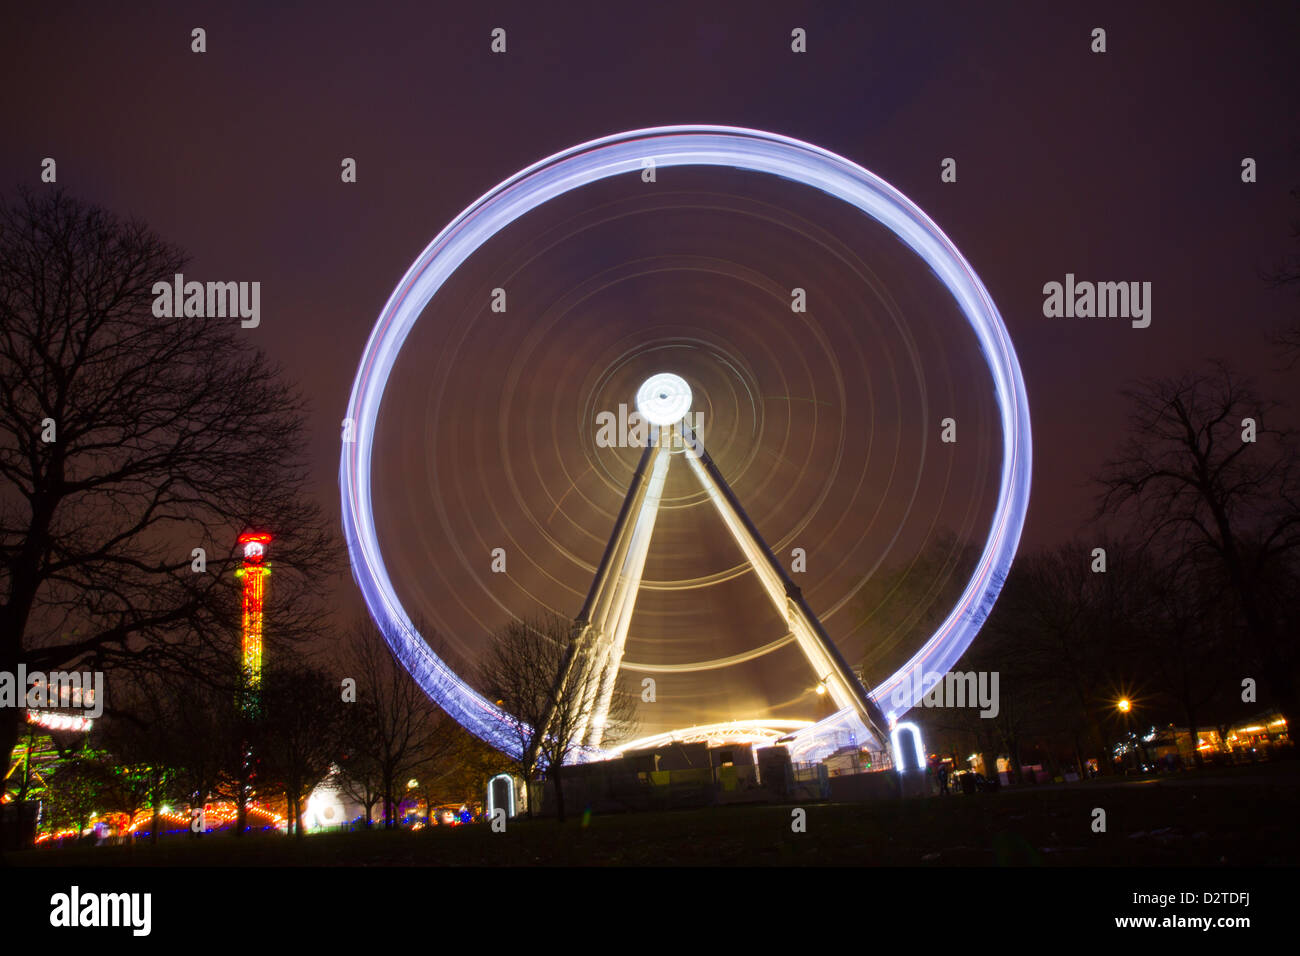 paris wheel in winter wonderland london Stock Photo